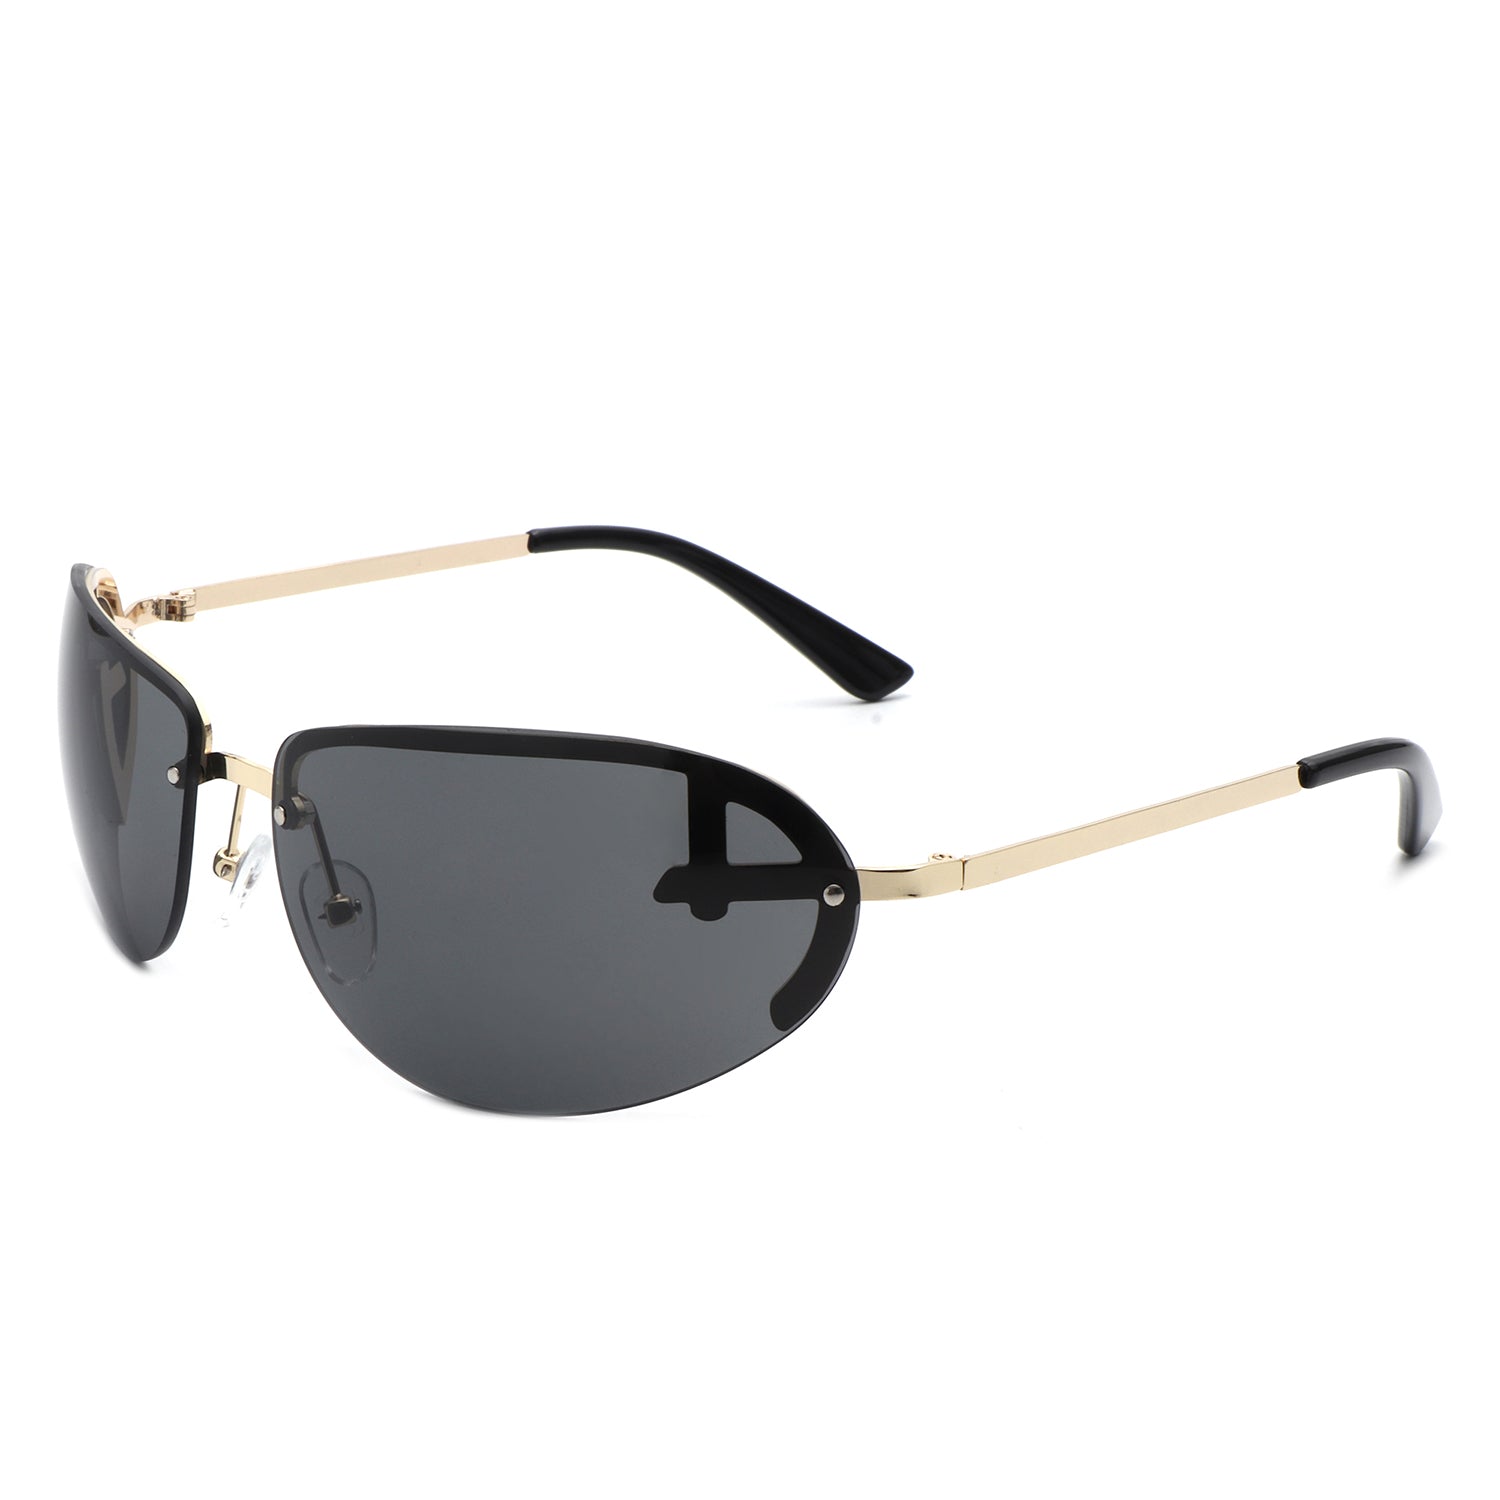 Retro Rimless Oval Tinted Fashion Round Wholesale Sunglasses by IRIS FASHION SUNGLASSES